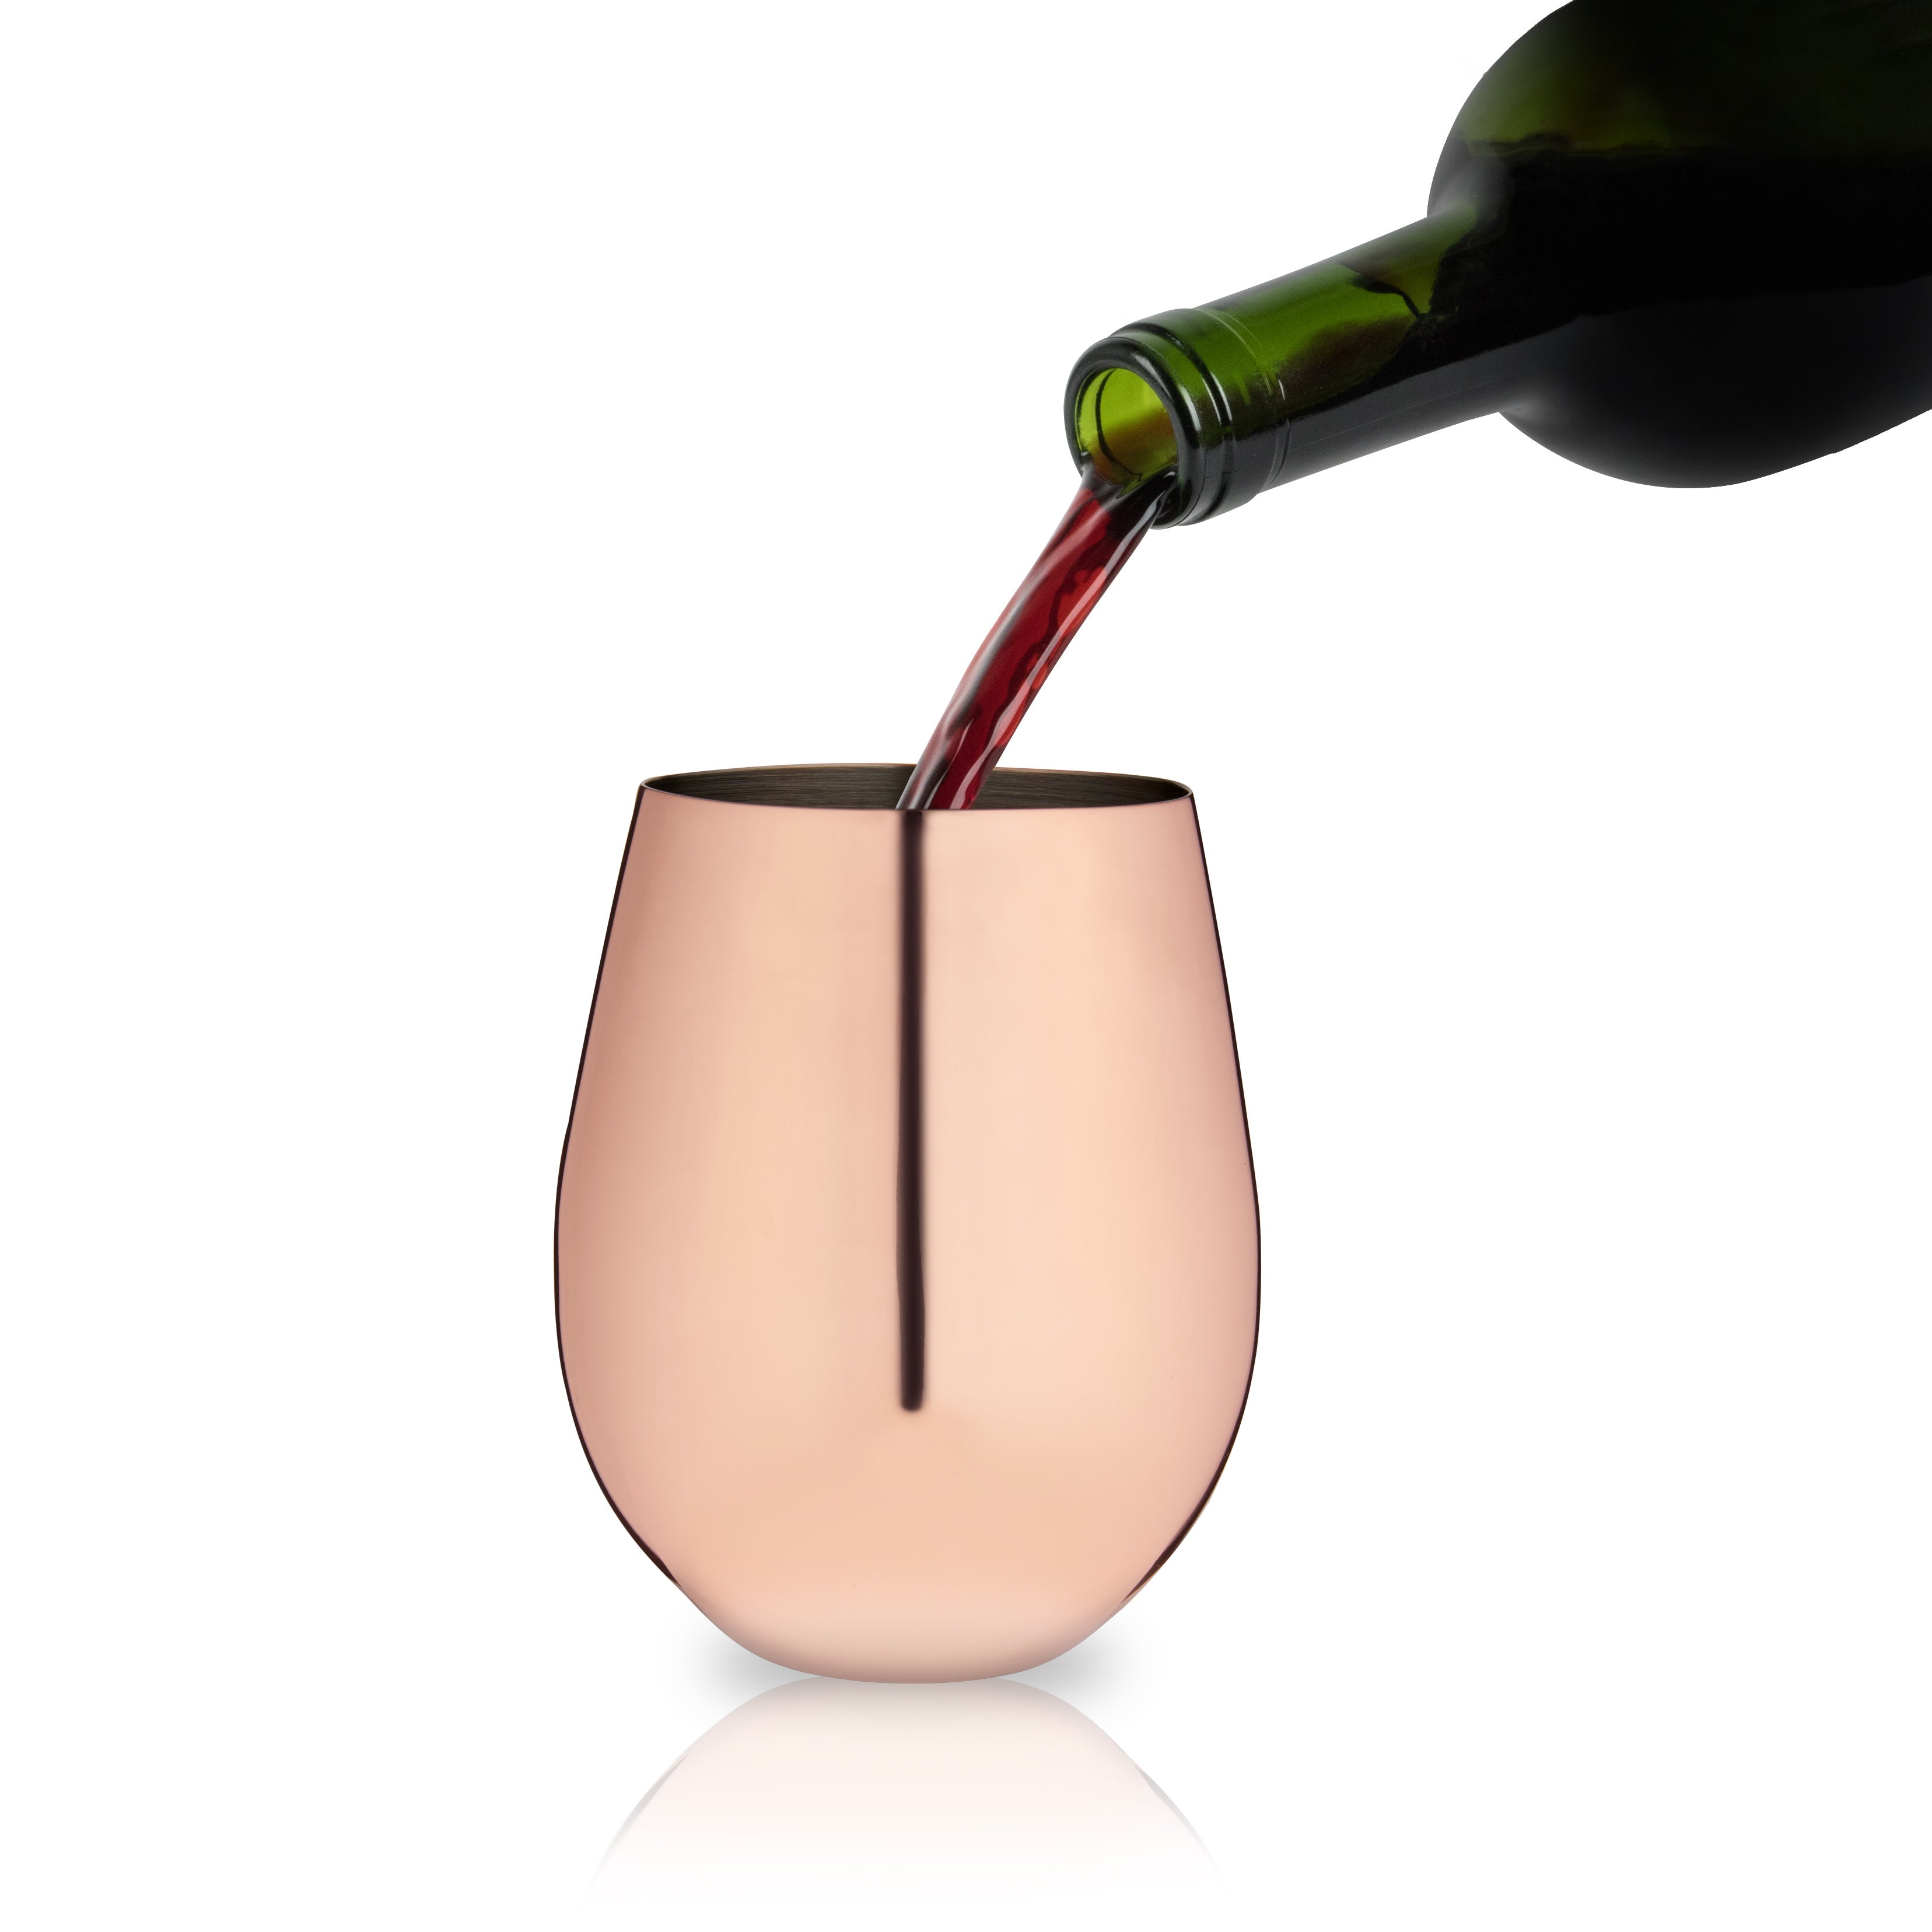 Viski Copper Stemless Wine Glasses